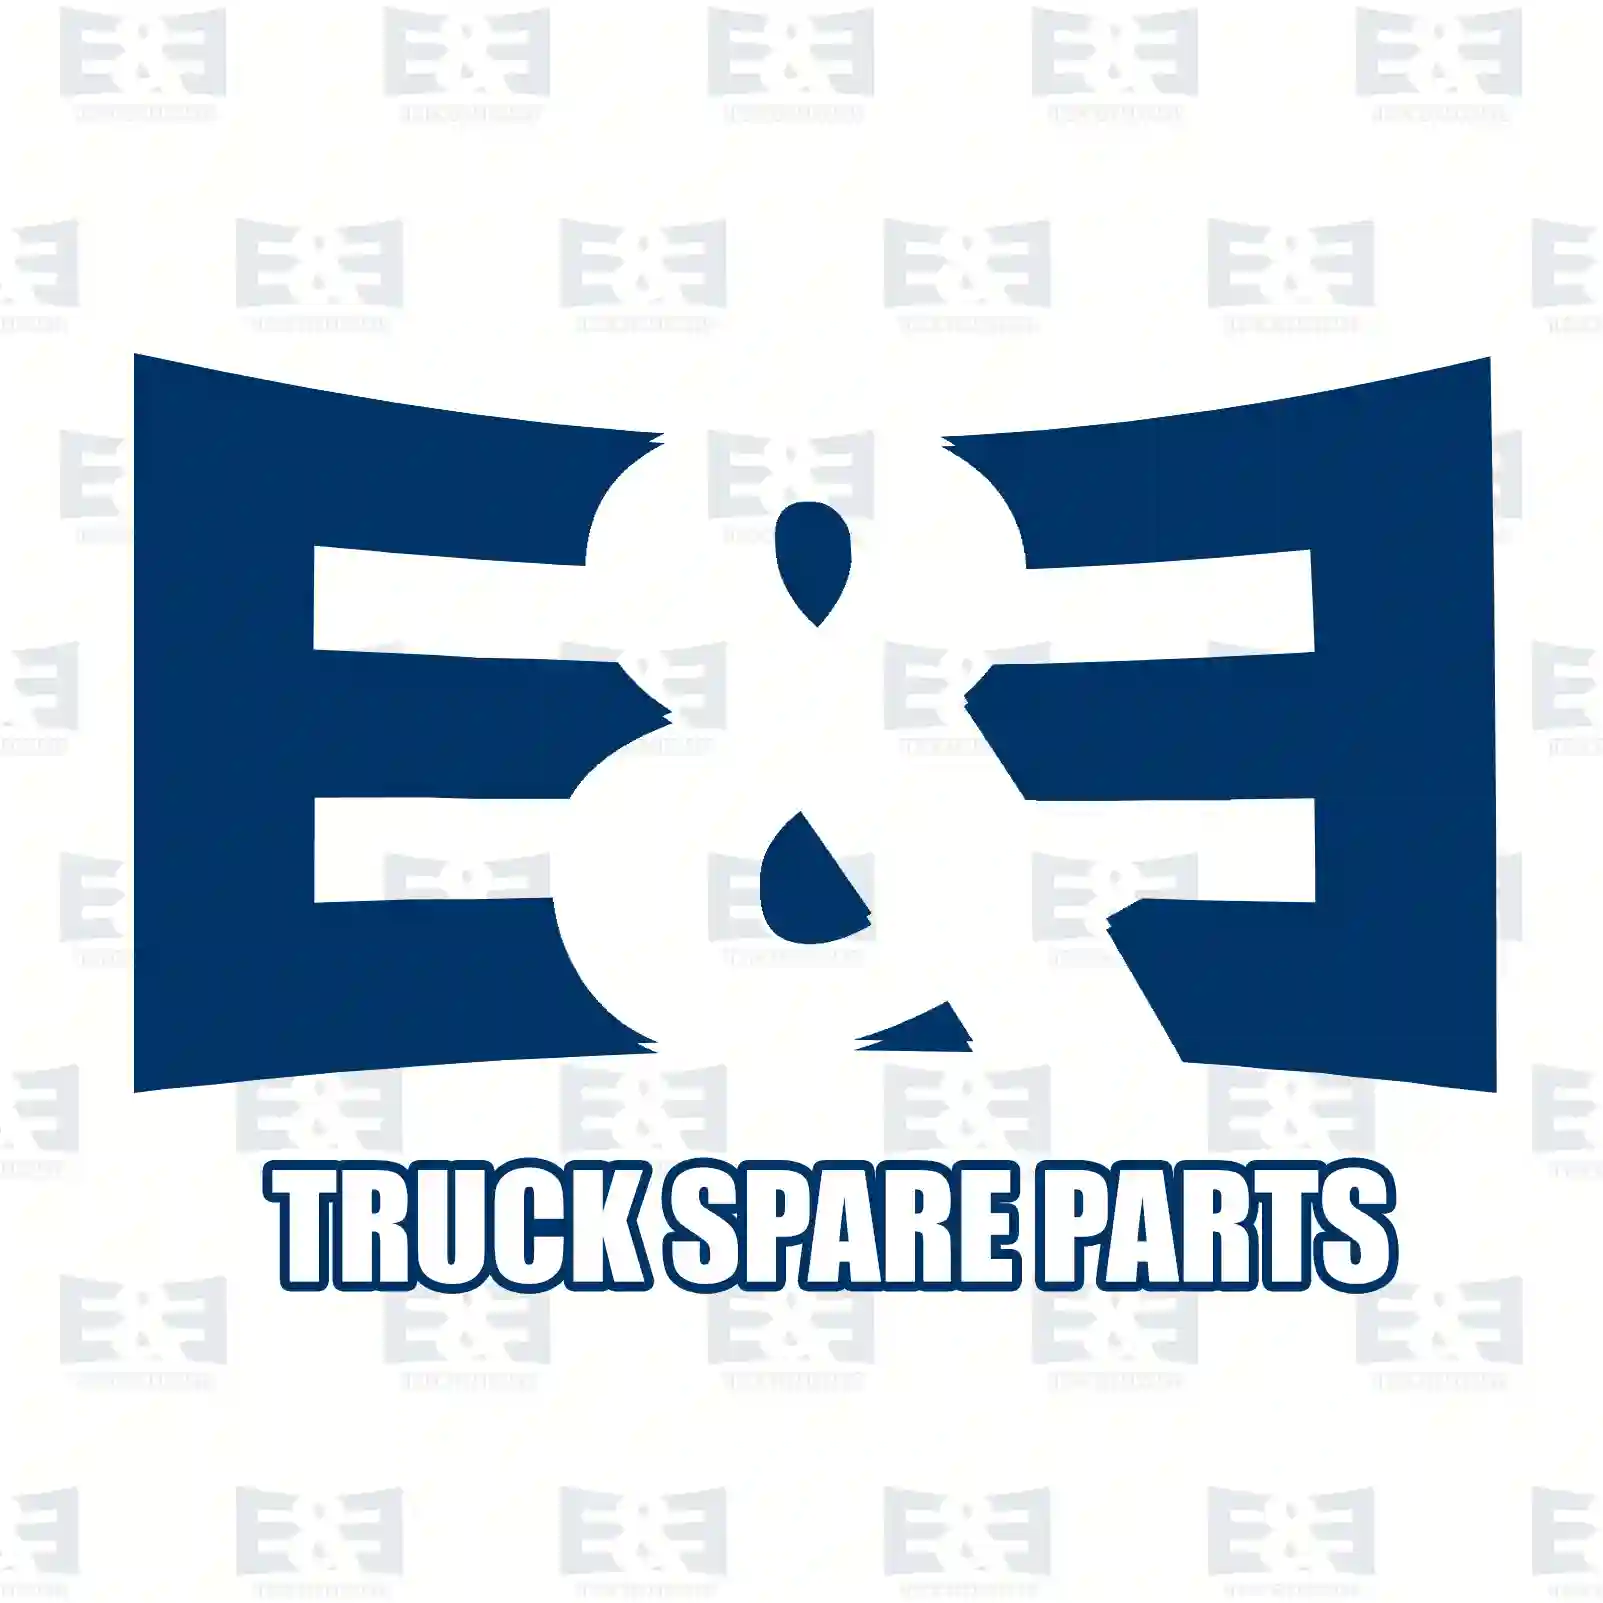 Spring bolt kit, 2E2281982, 5010557171S, 690105, 7421041753S1 ||  2E2281982 E&E Truck Spare Parts | Truck Spare Parts, Auotomotive Spare Parts Spring bolt kit, 2E2281982, 5010557171S, 690105, 7421041753S1 ||  2E2281982 E&E Truck Spare Parts | Truck Spare Parts, Auotomotive Spare Parts